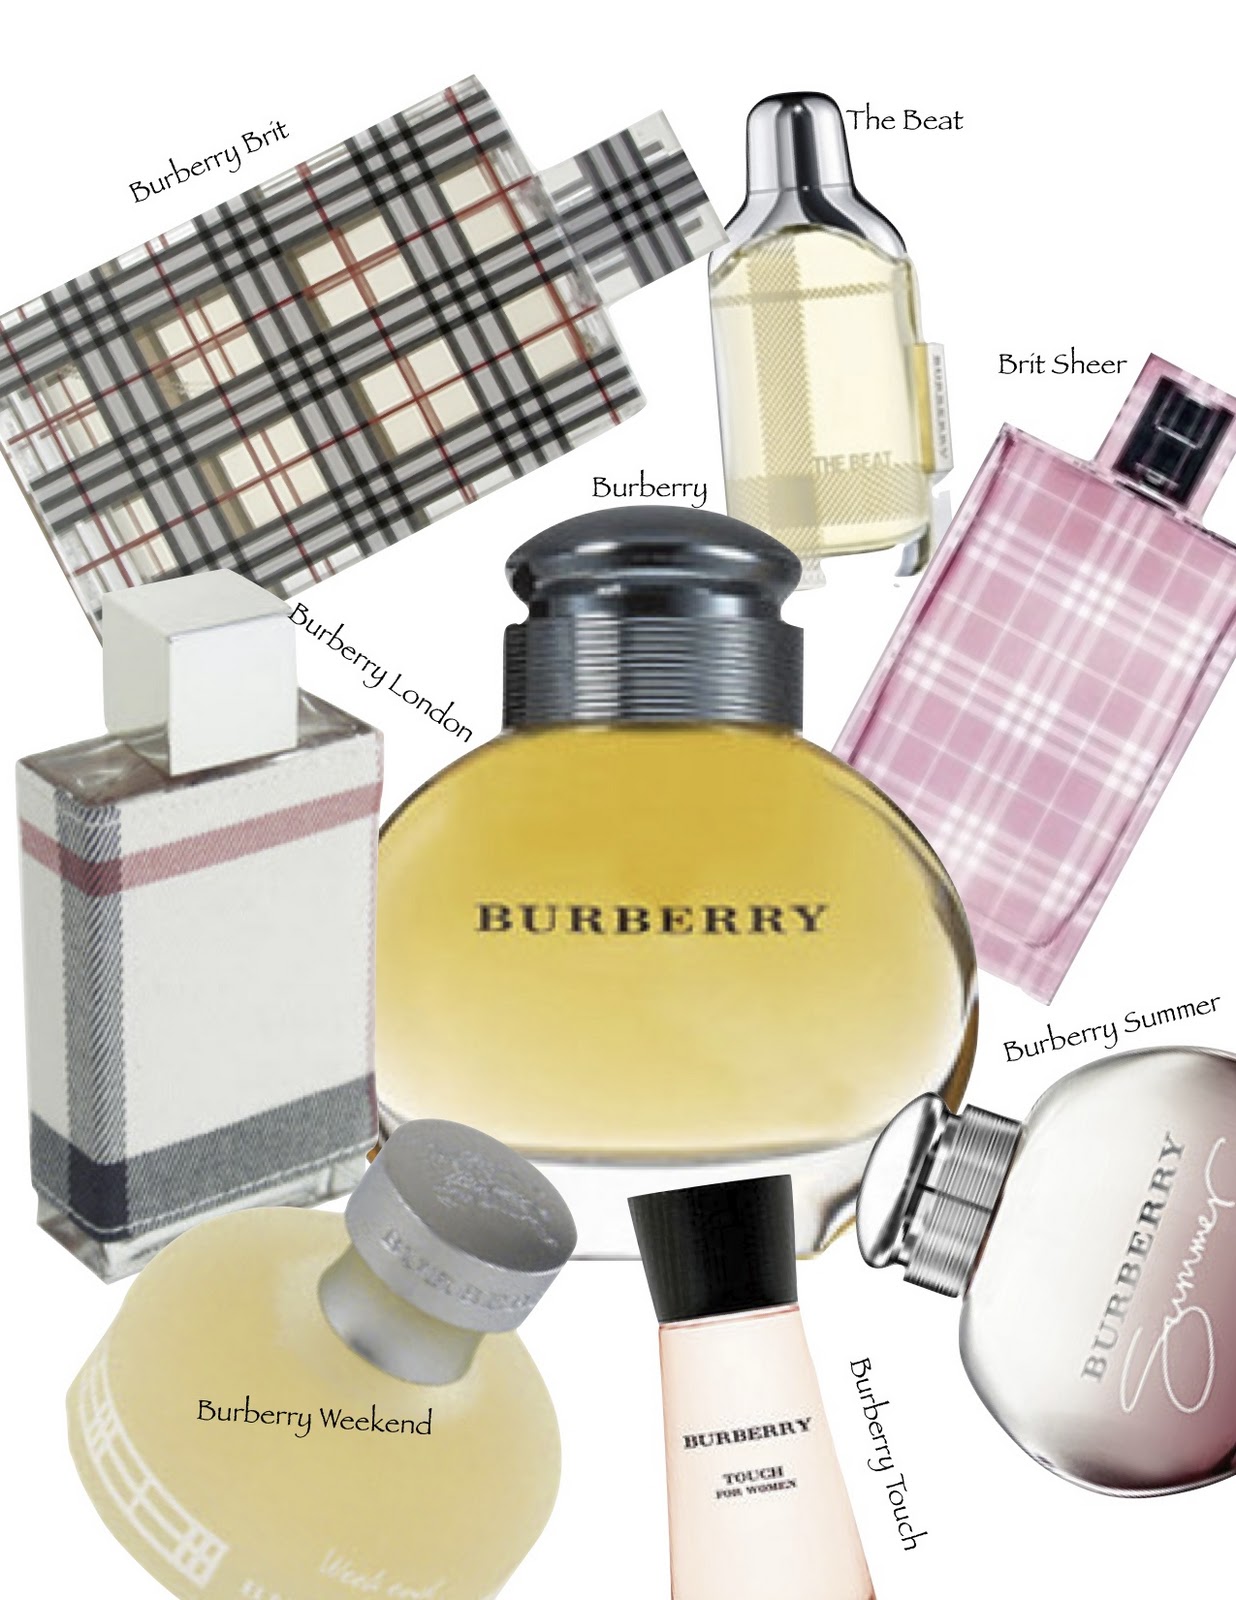 burberry perfume ulta